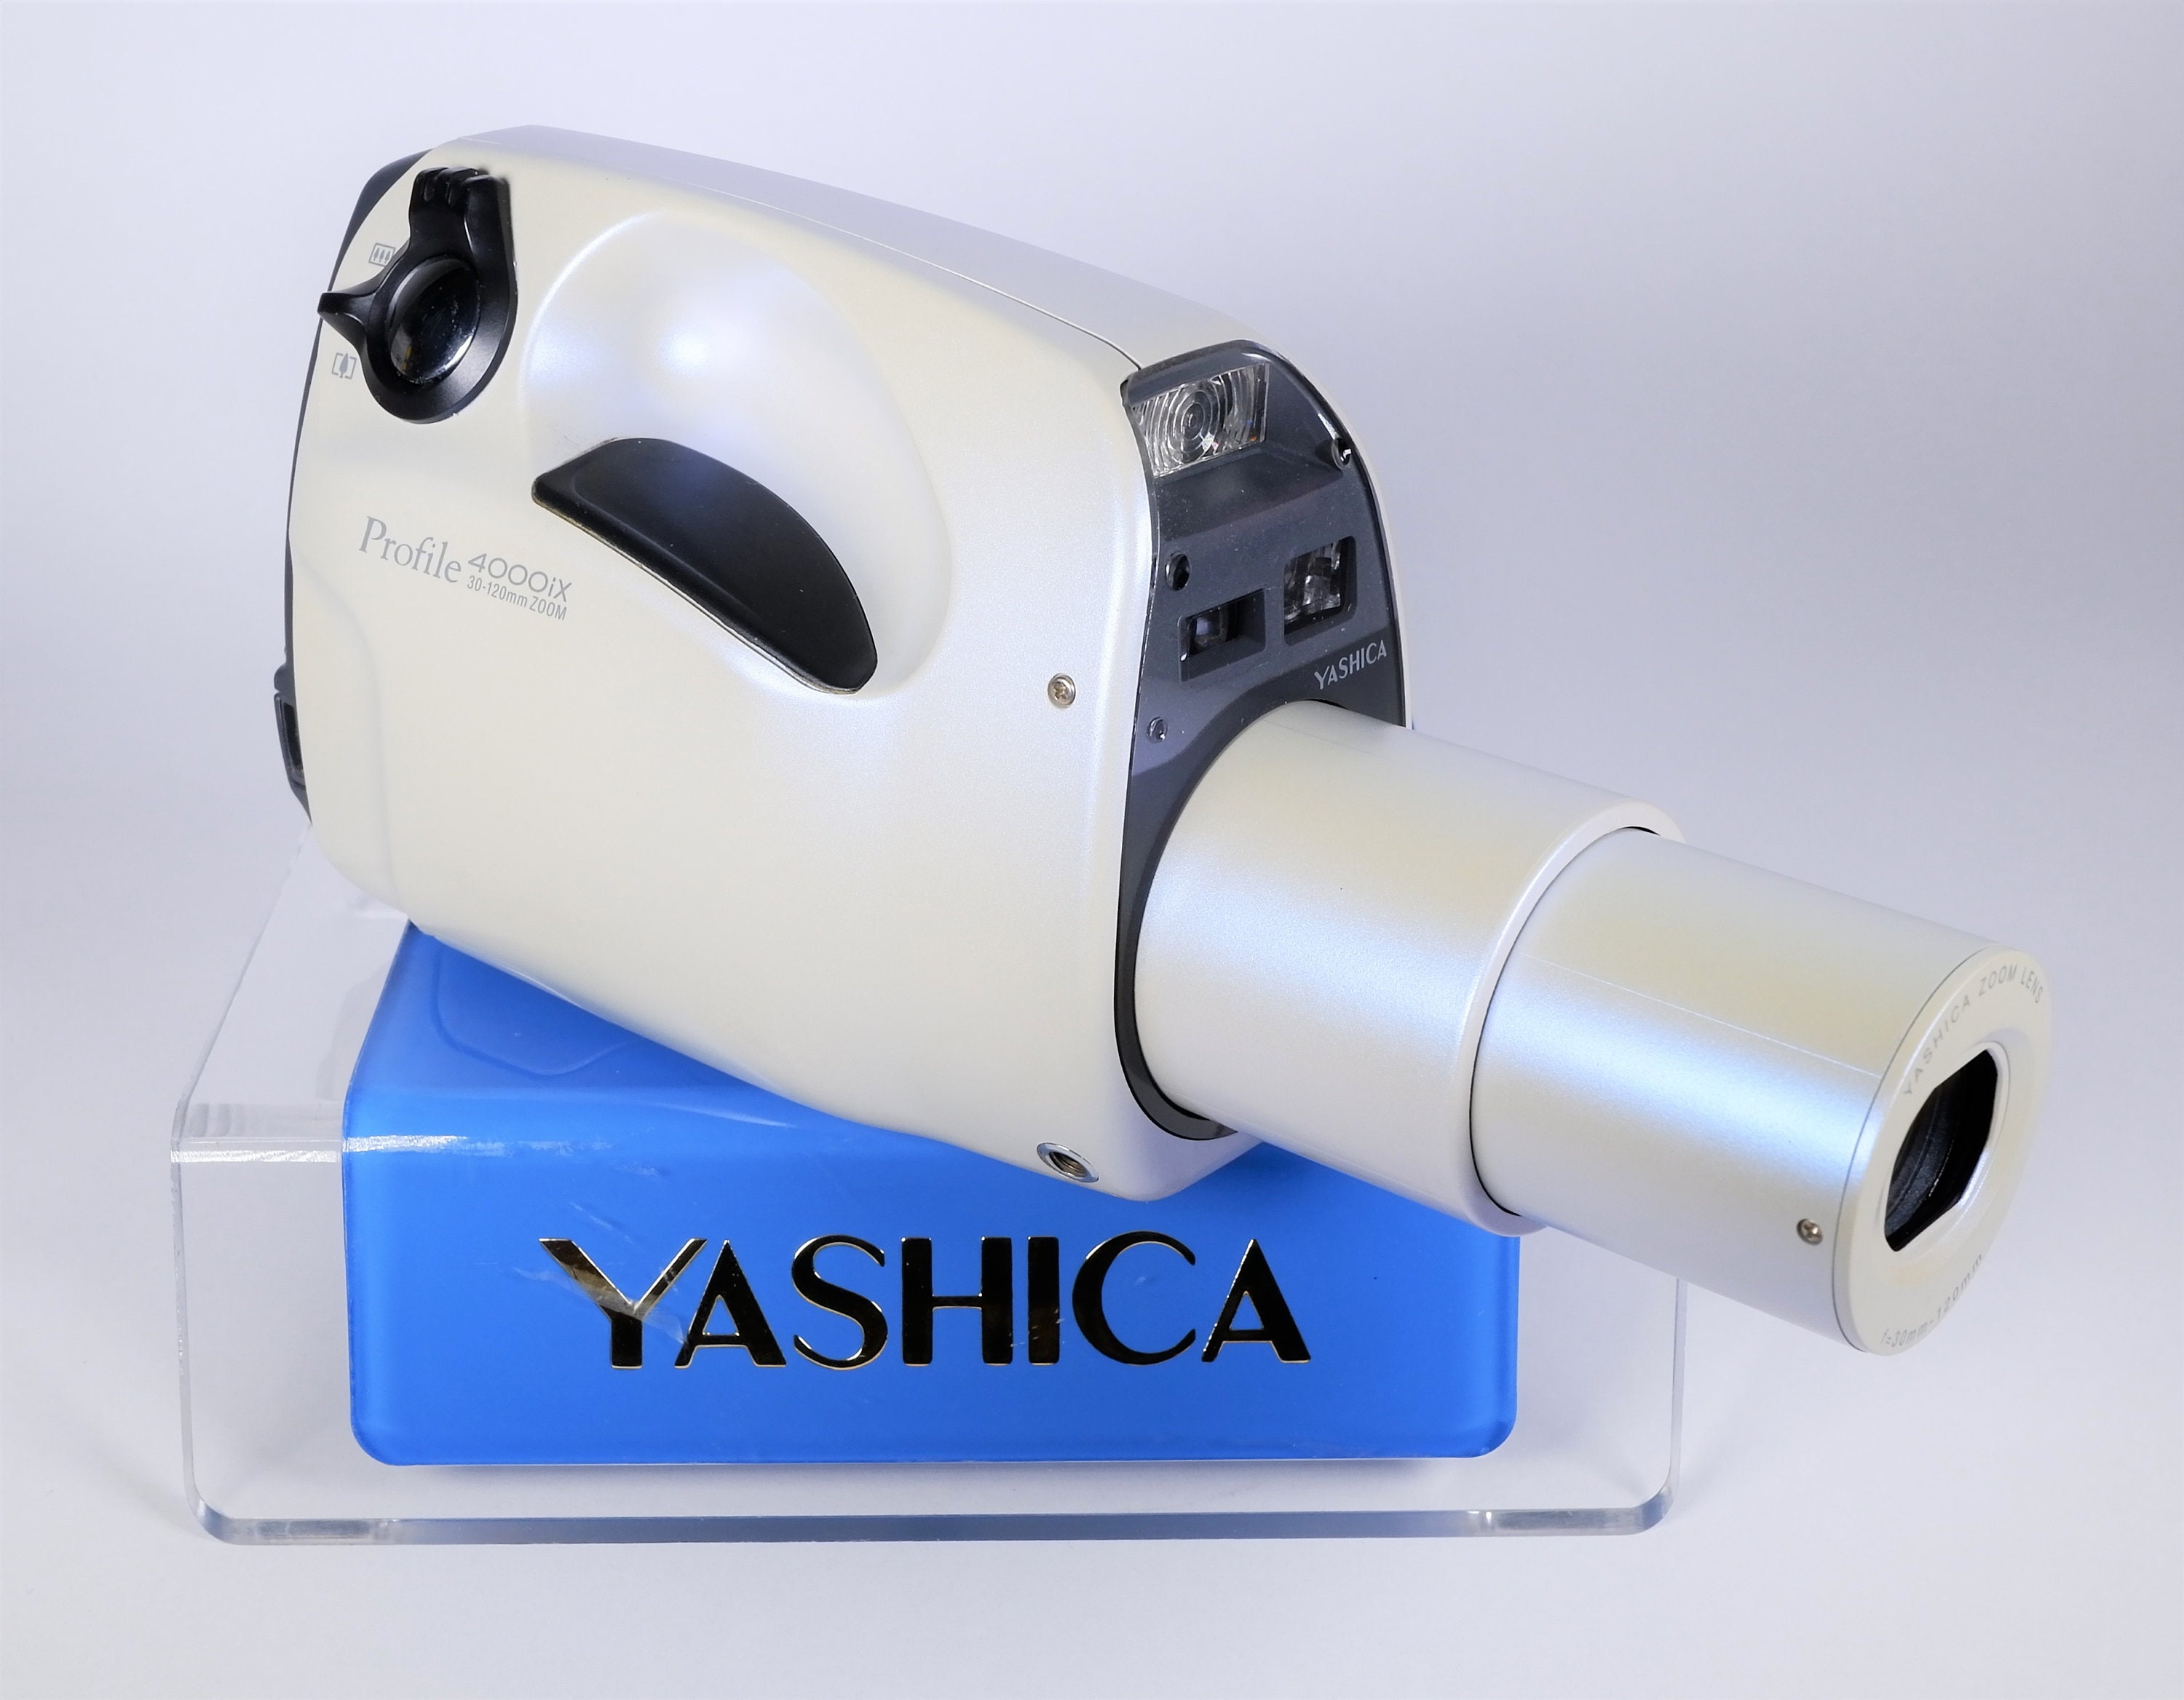 Yashica Kyocera Profile 4000ix Zoom APS Film Camera - Samurai